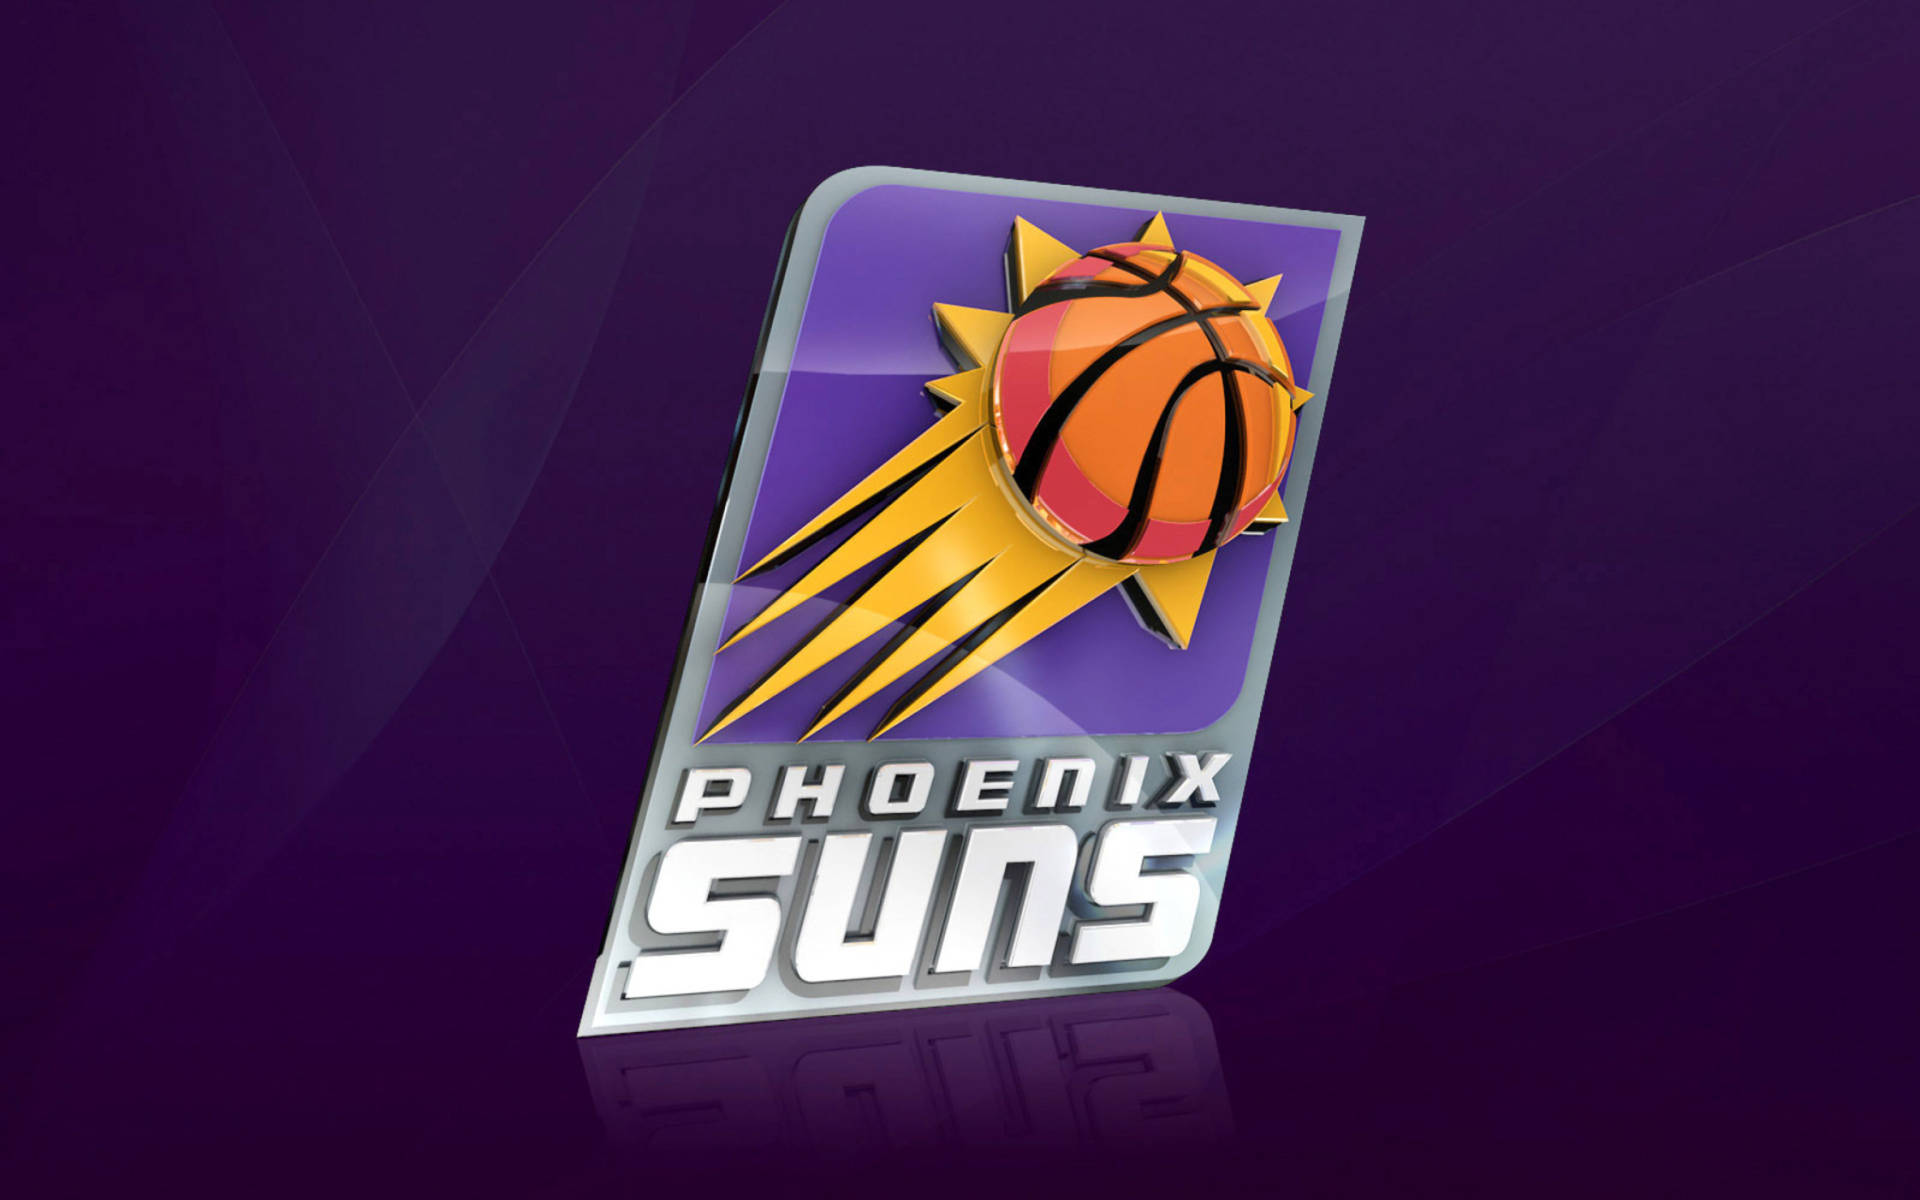 Free Phoenix Suns Picture, Phoenix Suns Picture for FREE